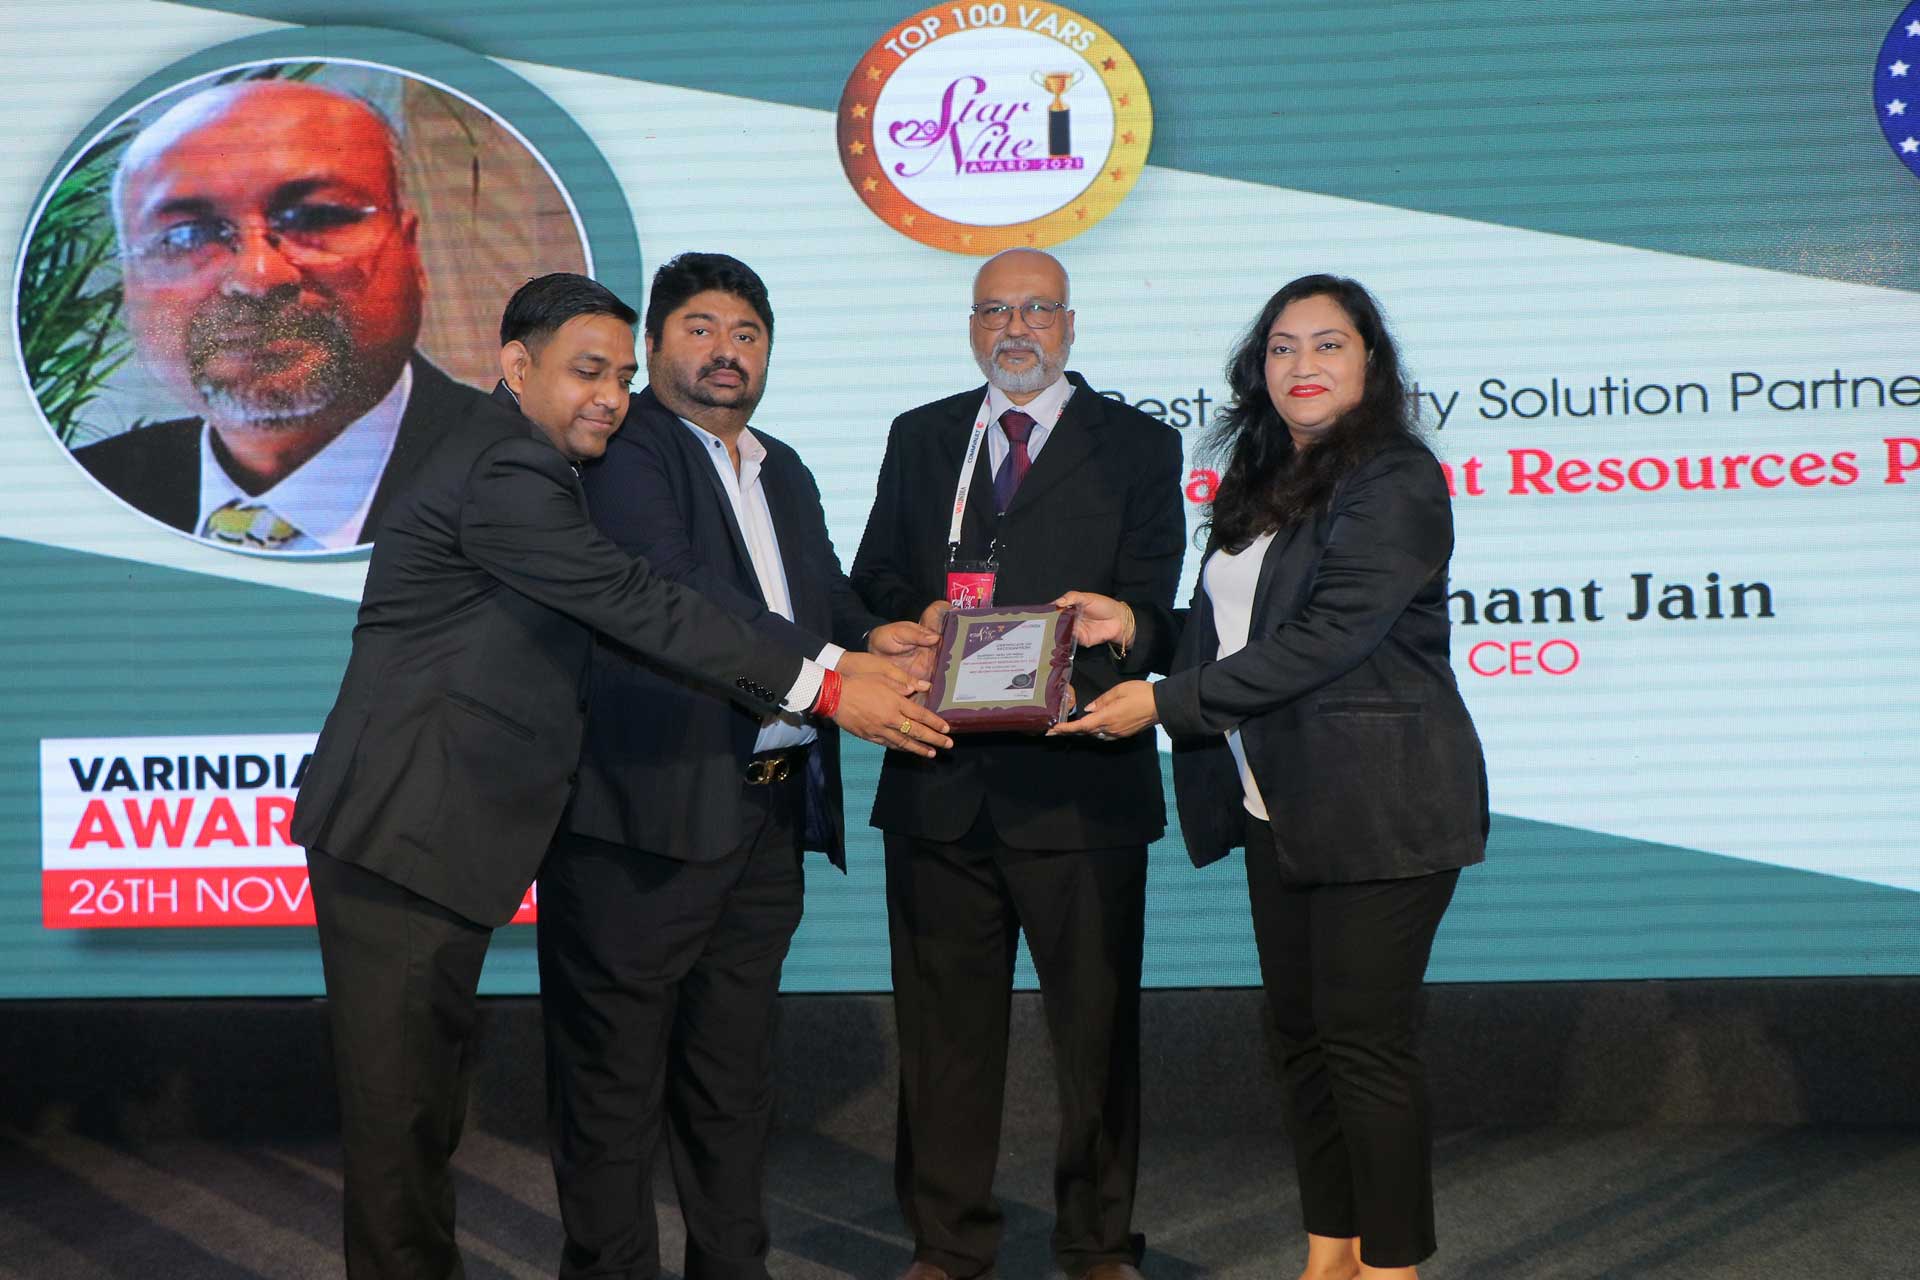 Best Security Solution Partner Award goes to JNR Management Resources Pvt. Ltd., at 20th Star Nite Awards 2021